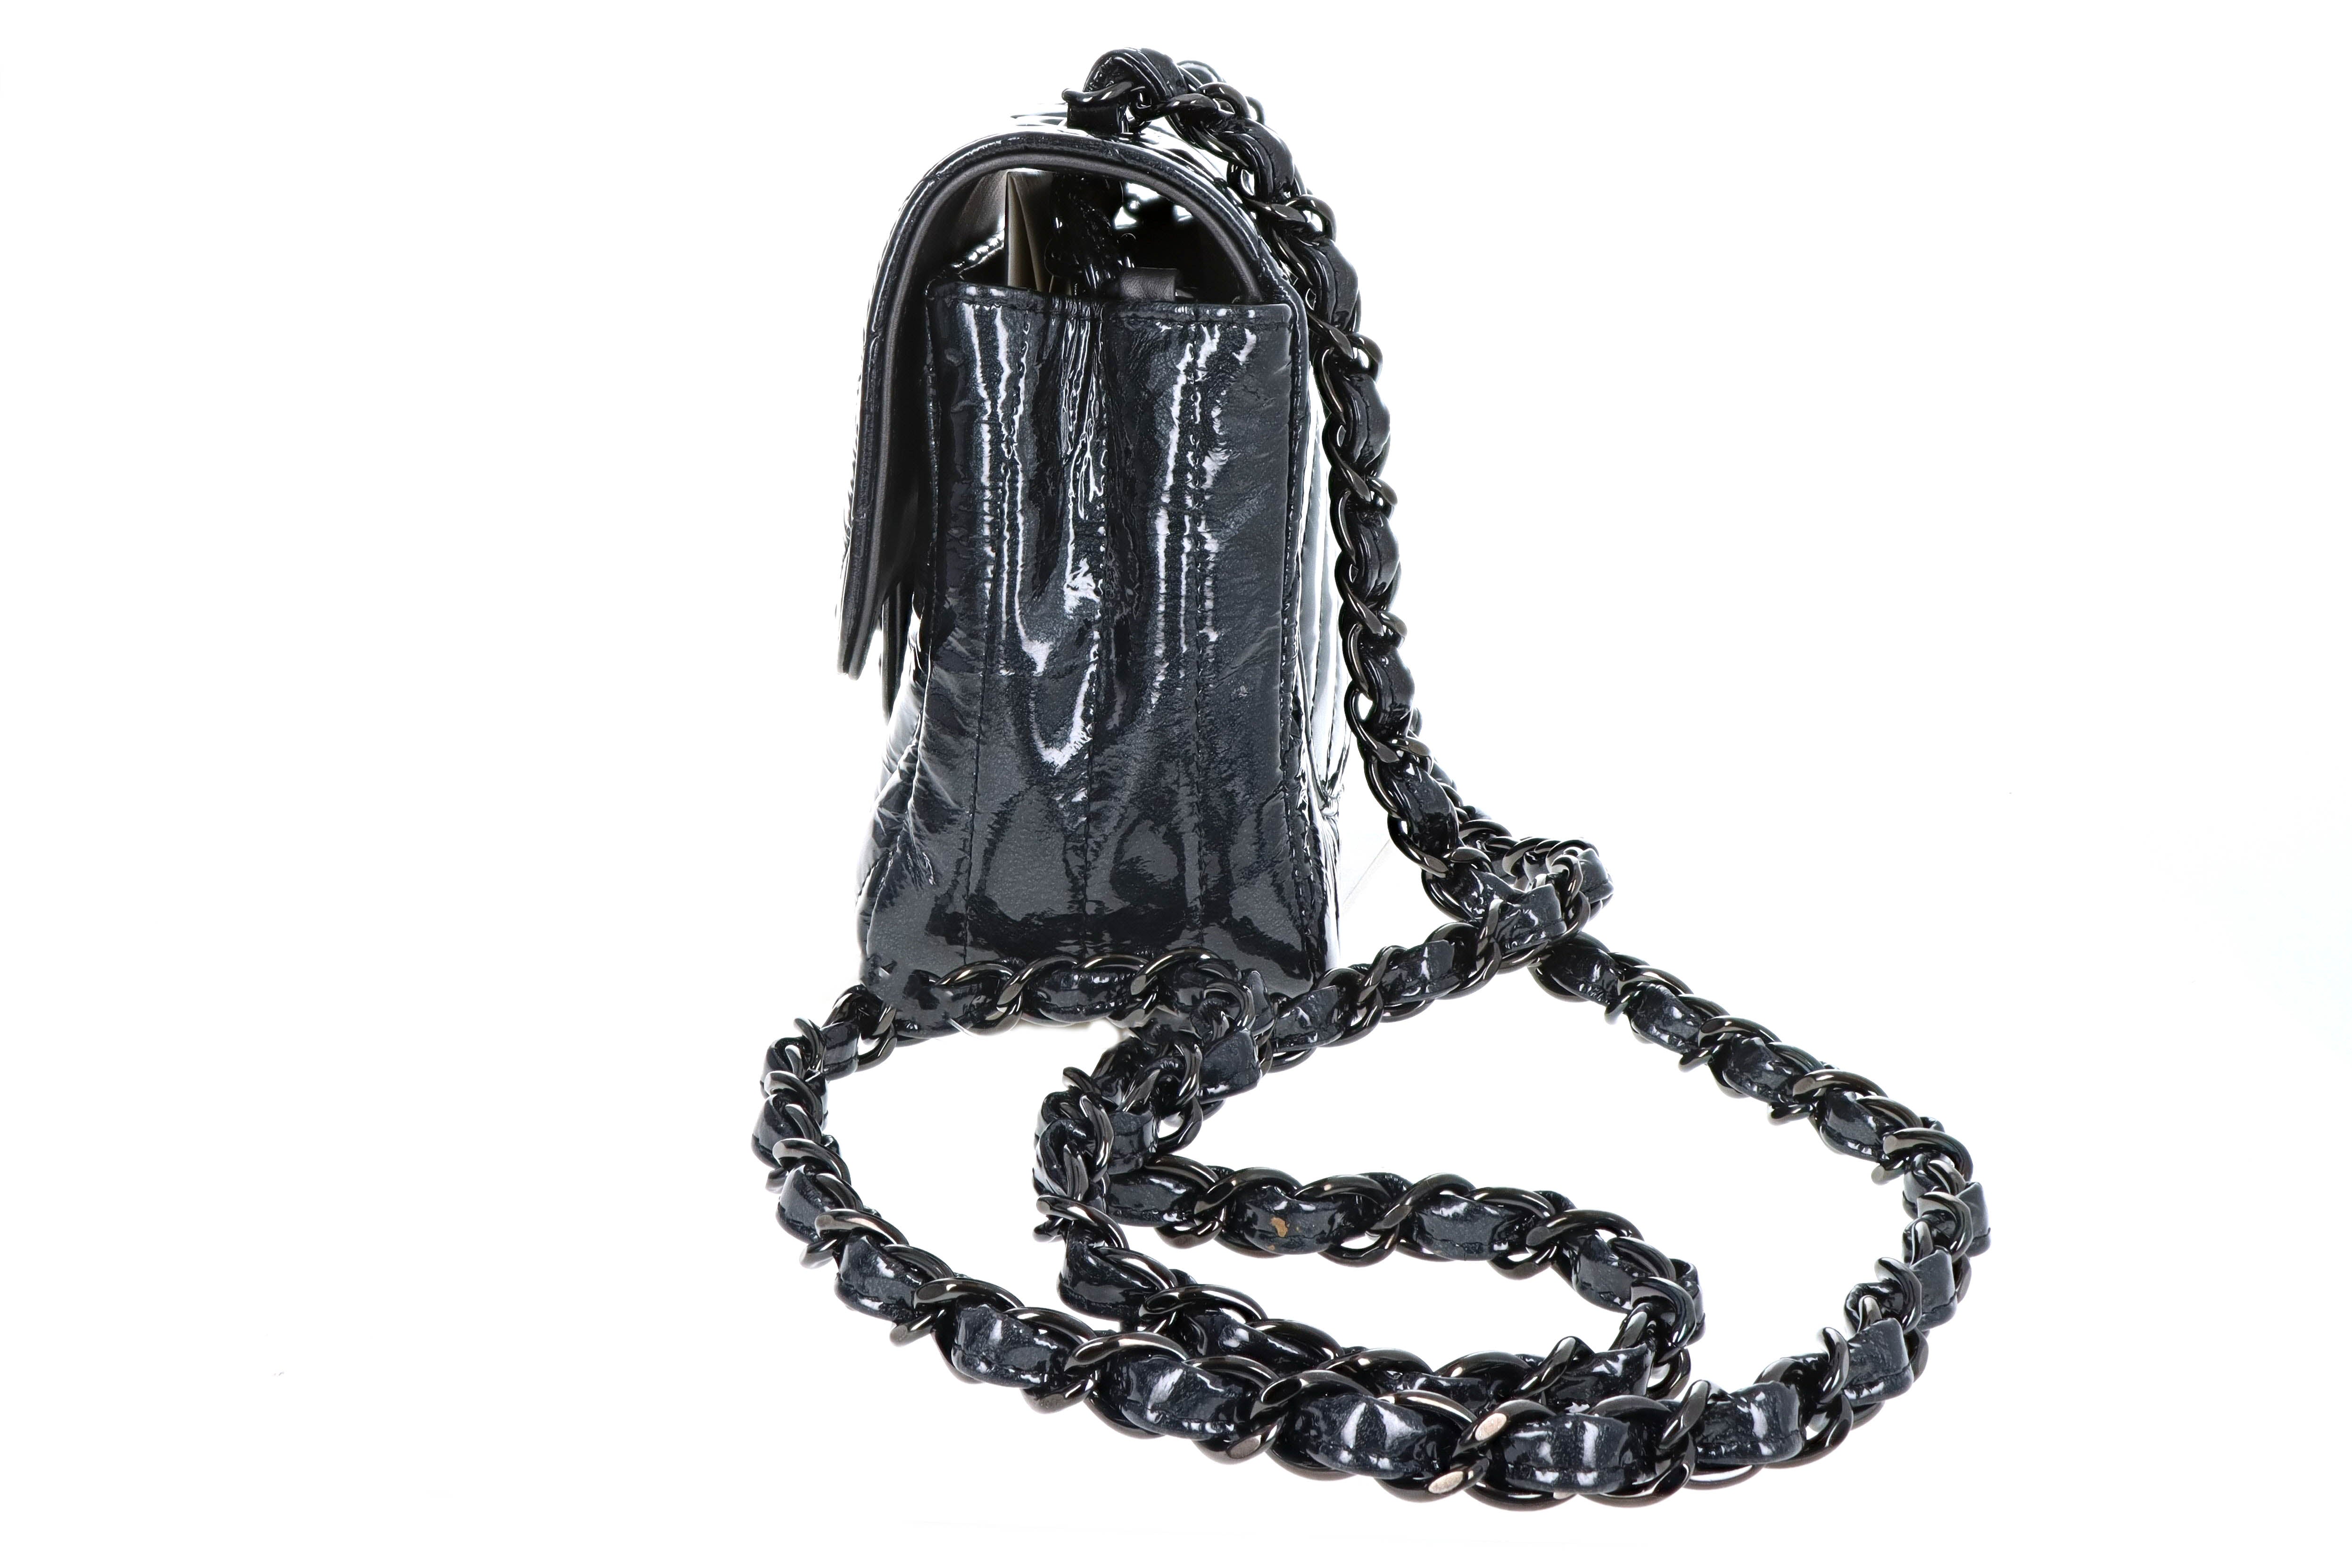 AUTH CHANEL TOP Logo CC Quilted Black Flap Patent Leather Chain Shoulder Bag  $1,169.00 - PicClick